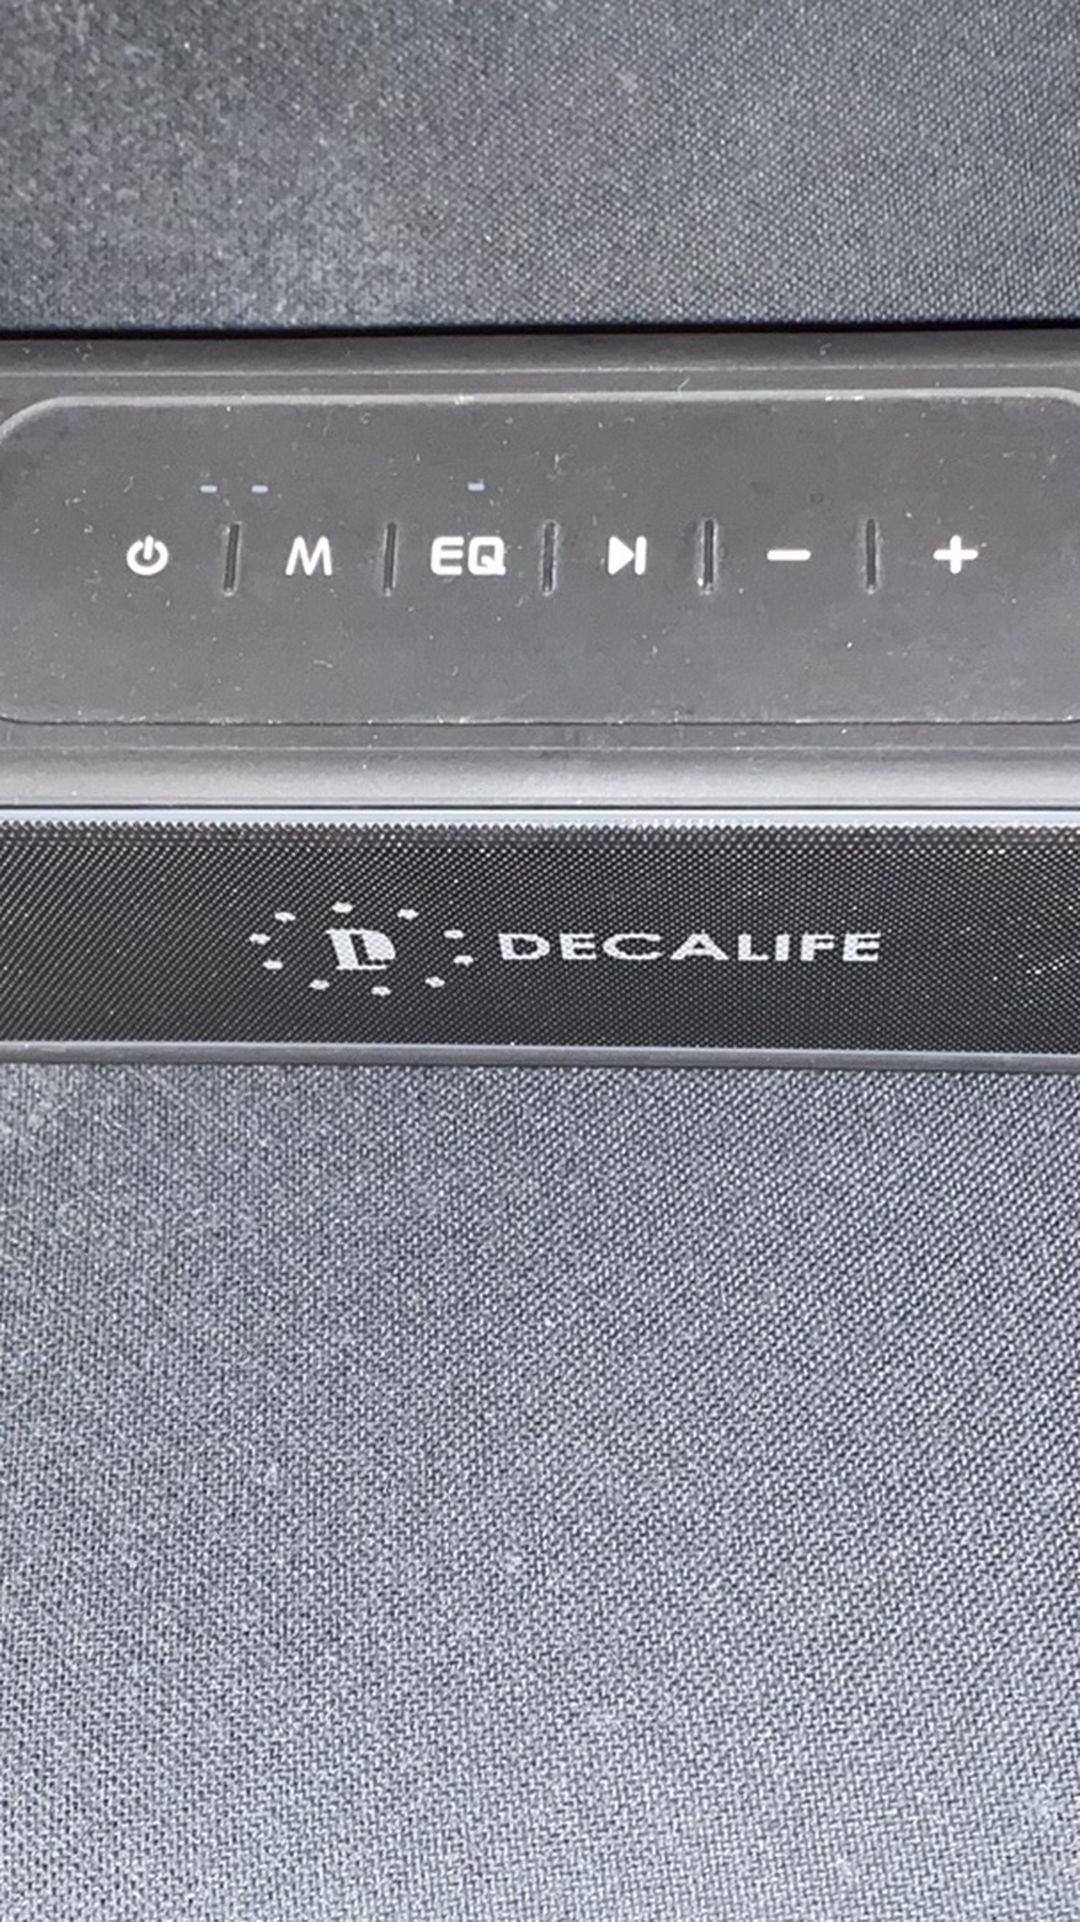 Decalife Bluetooth Speaker